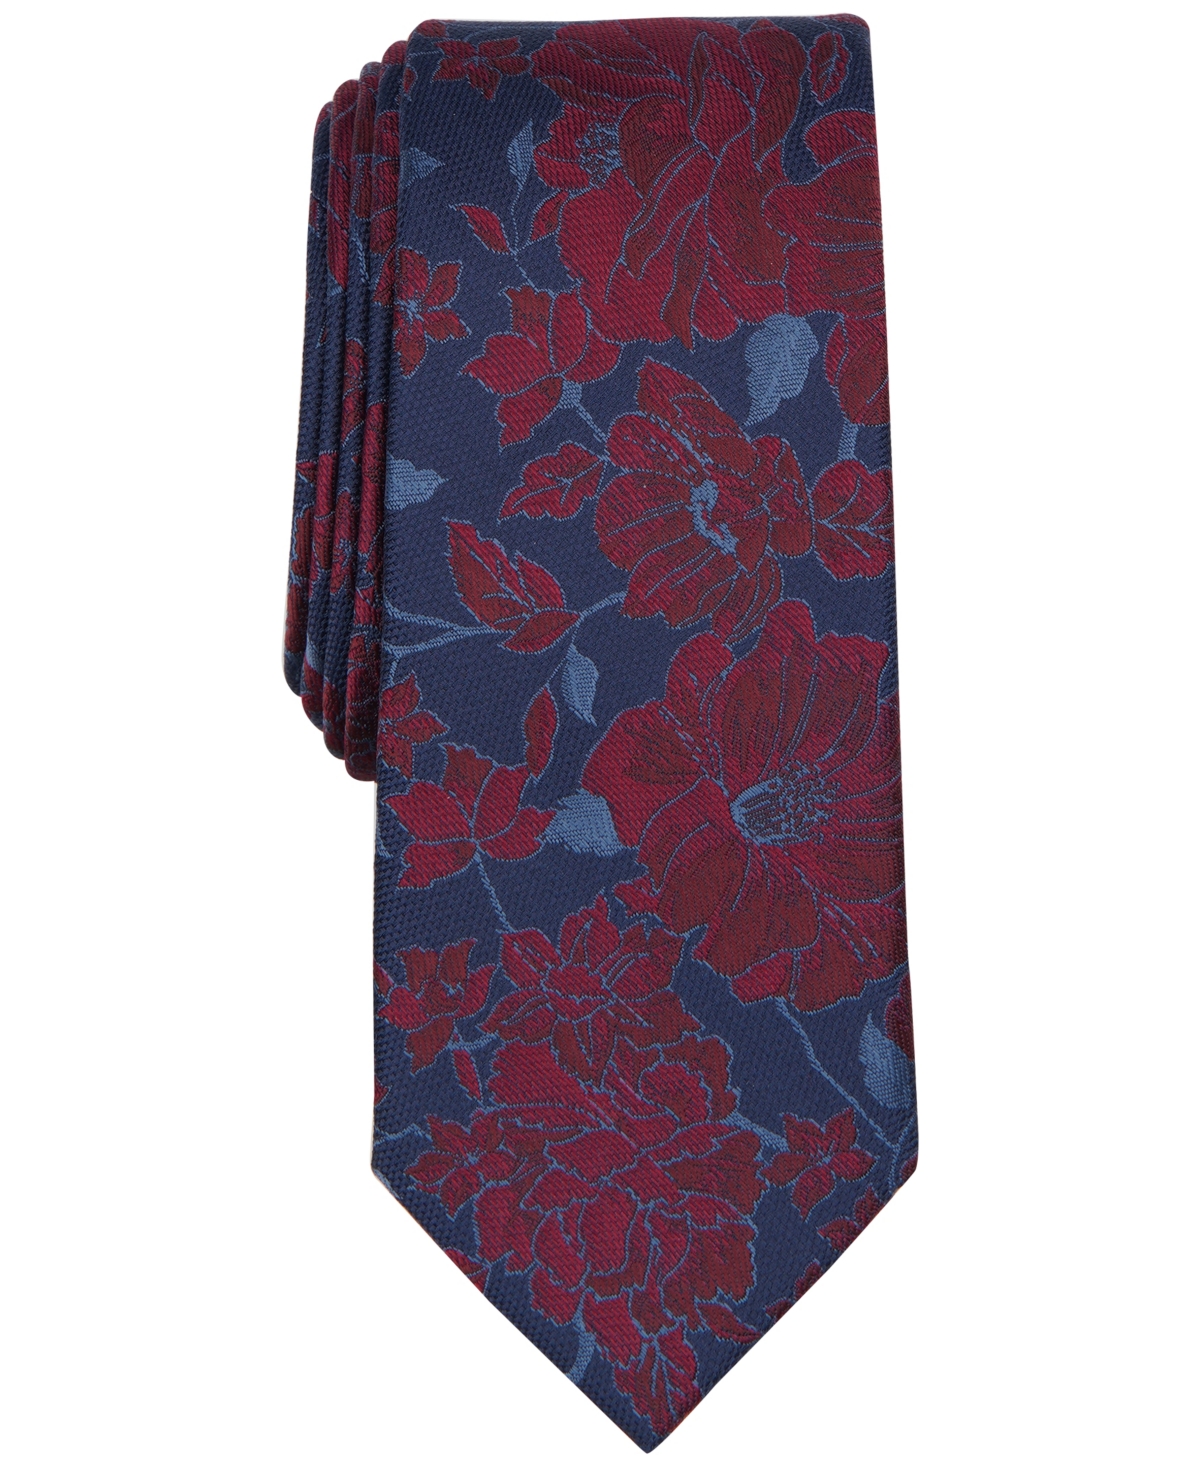 Men's Darlington Floral Tie, Created for Macy's - Burgundy